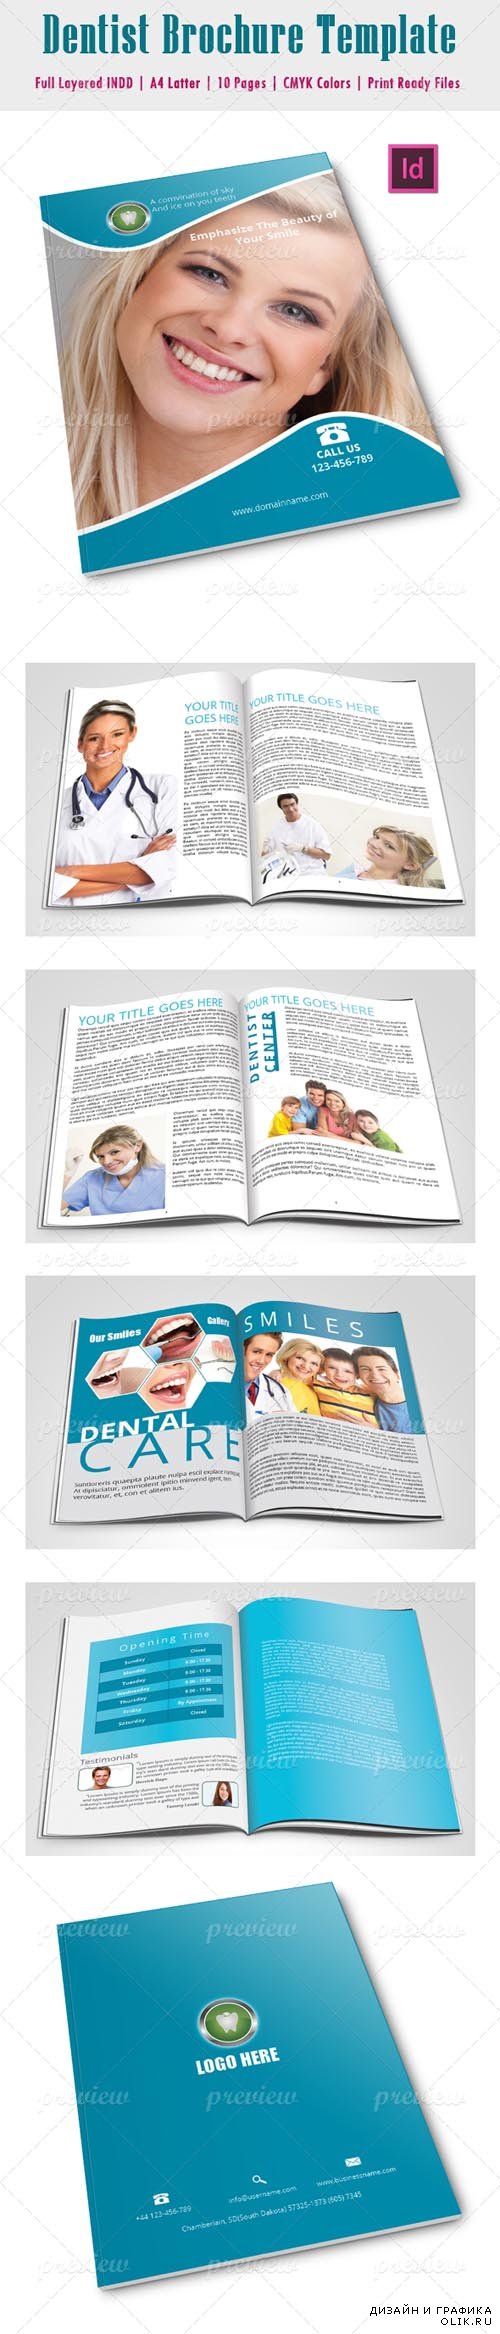 Dentist Brochure ИД Template